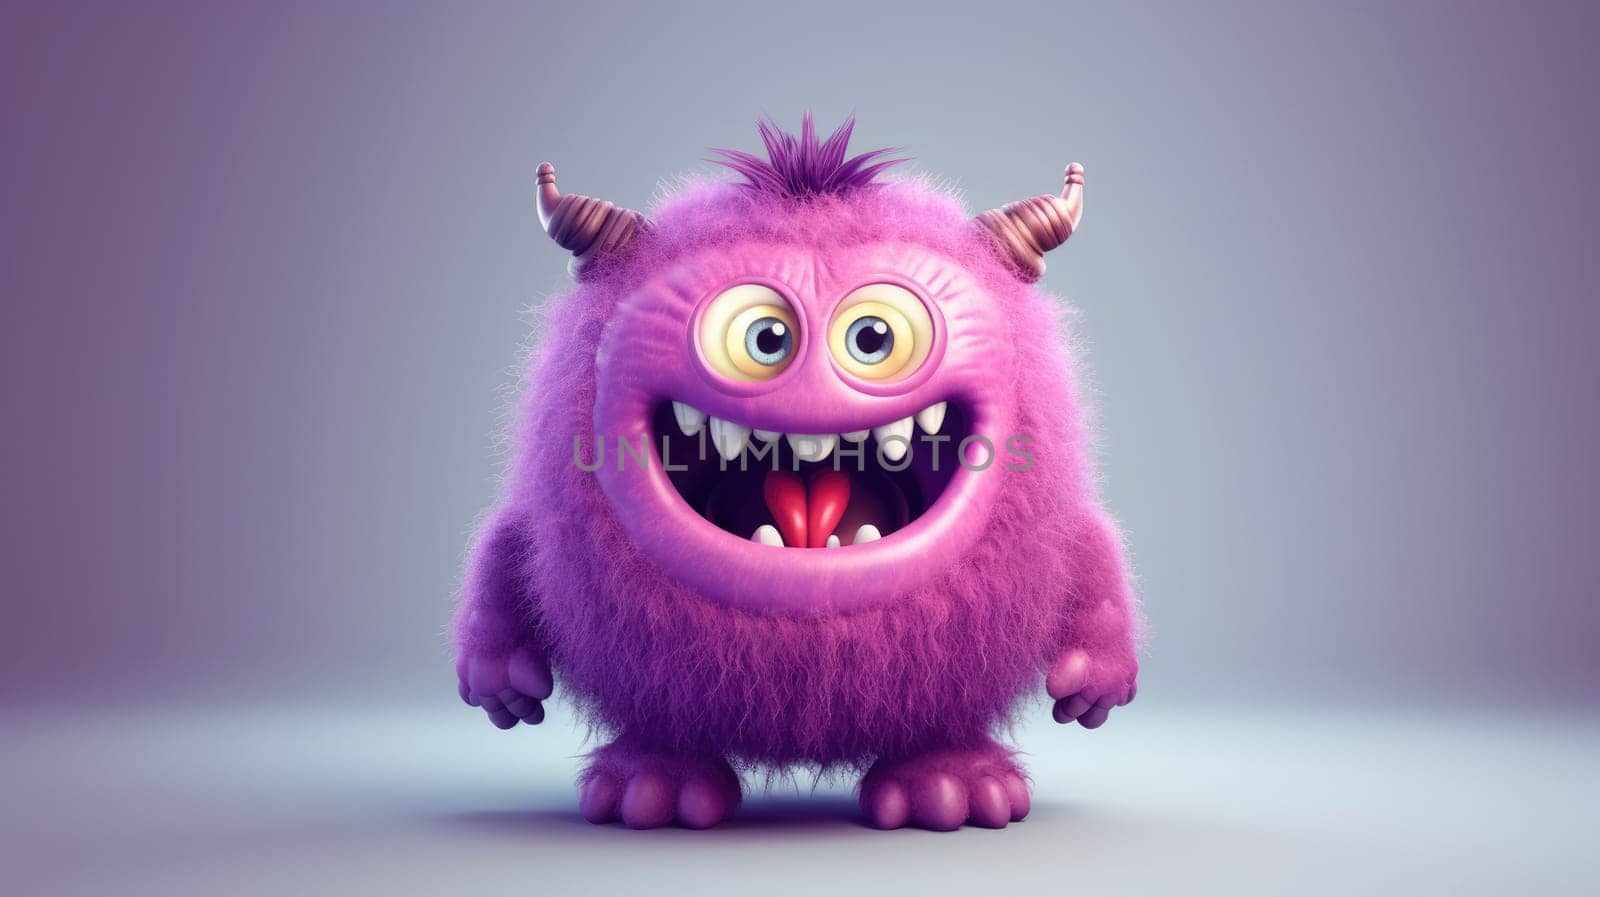 Cute Furry fluffy Pink Monster, cartoon 3d, alien monster illustration, on purple background